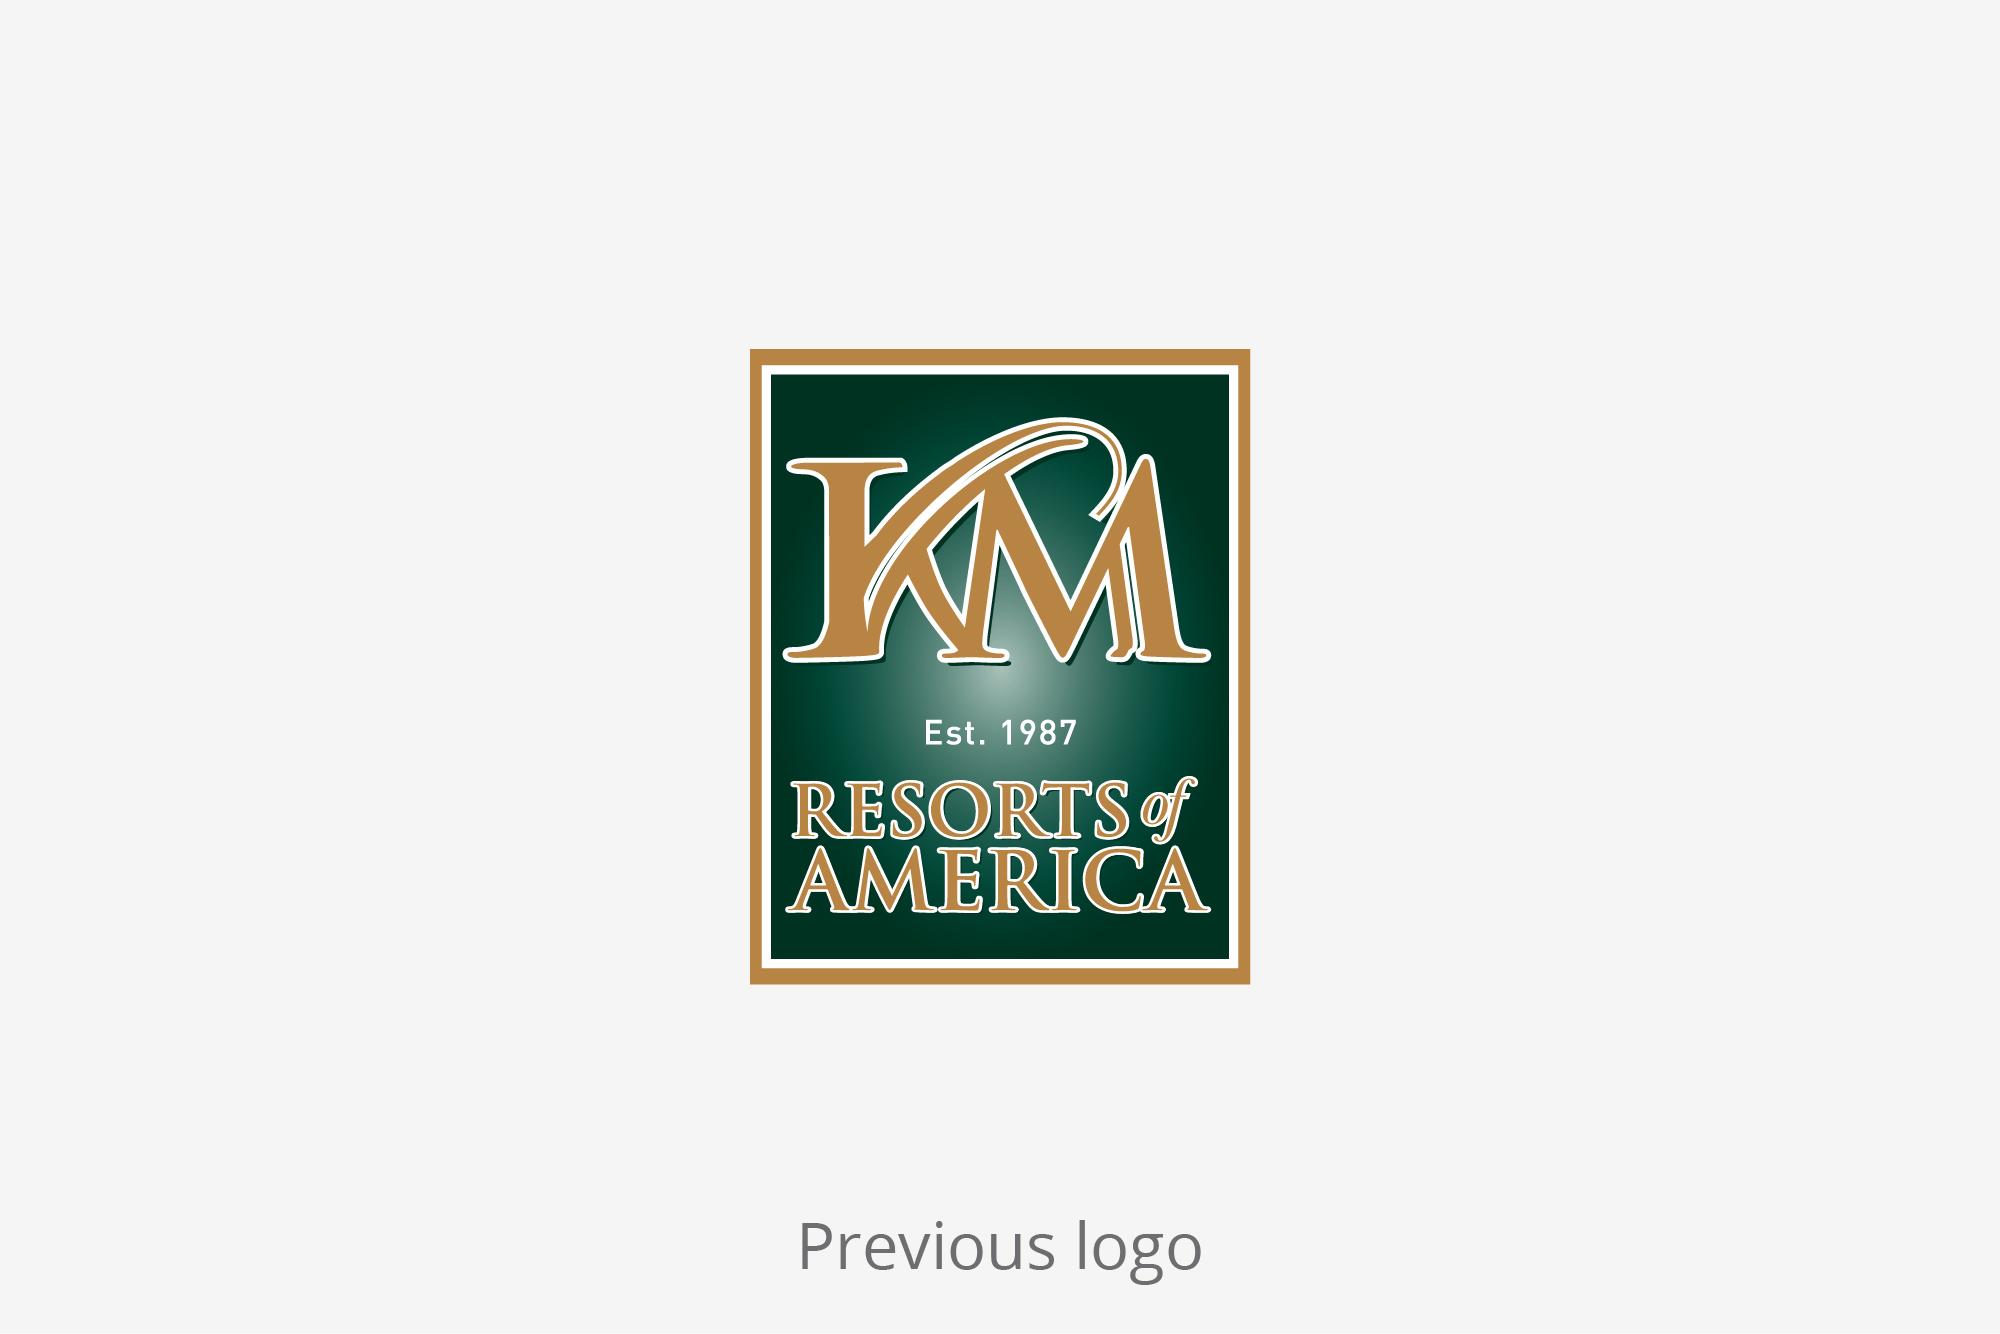 KM Resorts of America old logo